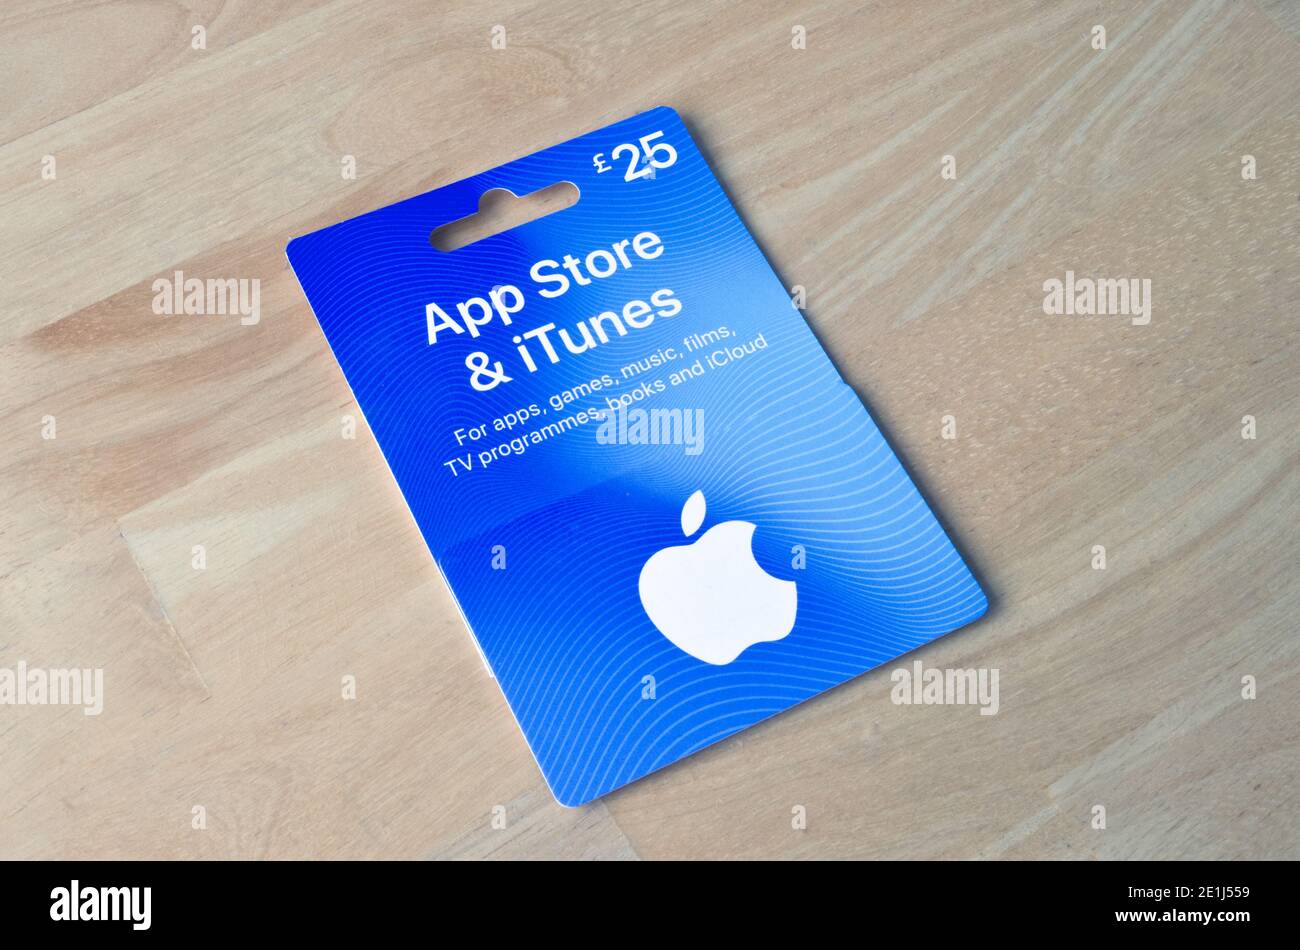  Apple Gift Card - App Store, iTunes, iPhone, iPad